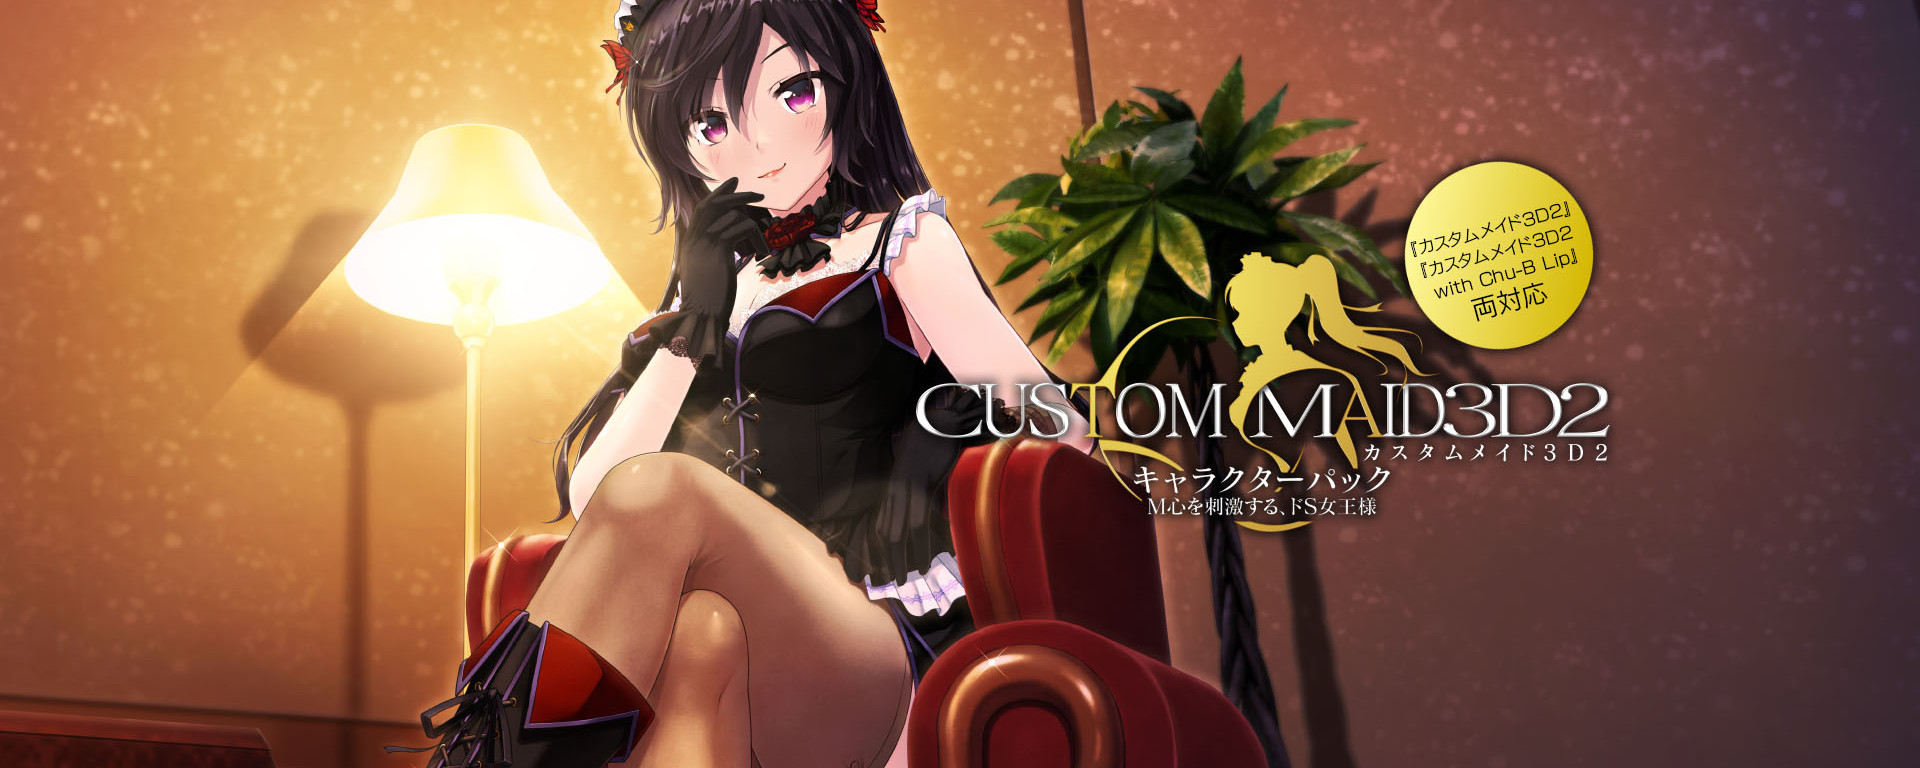 custom maid 3d 2 full game dlc